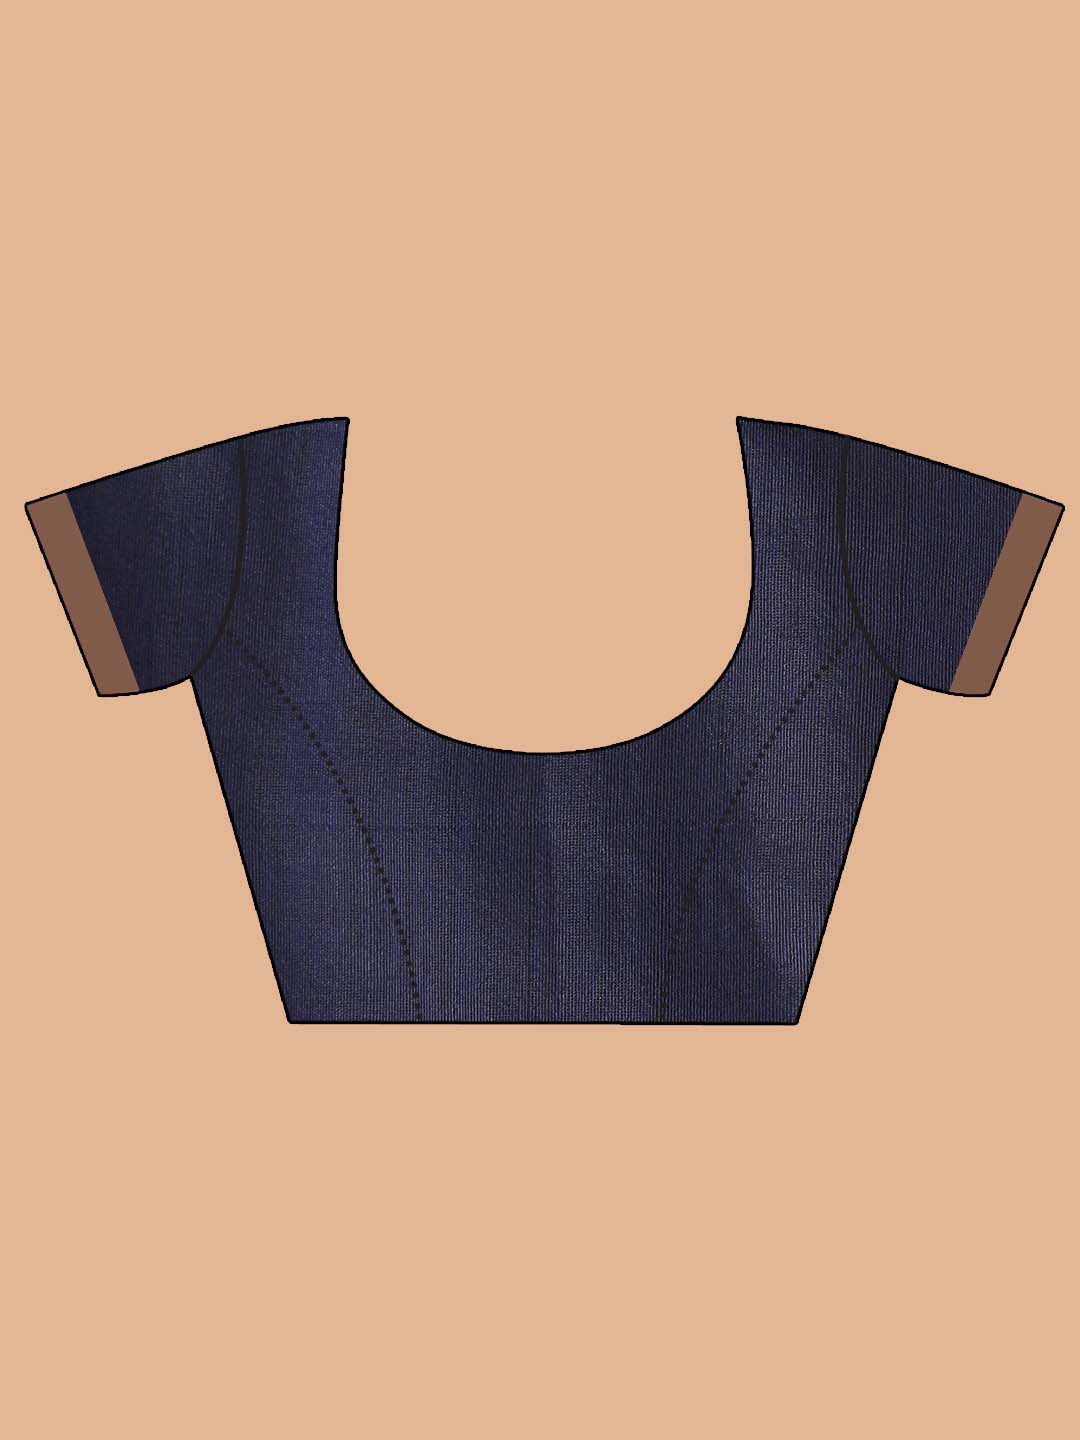 Indethnic Blue Bengal Handloom Cotton Blend Work Saree - Blouse Piece View